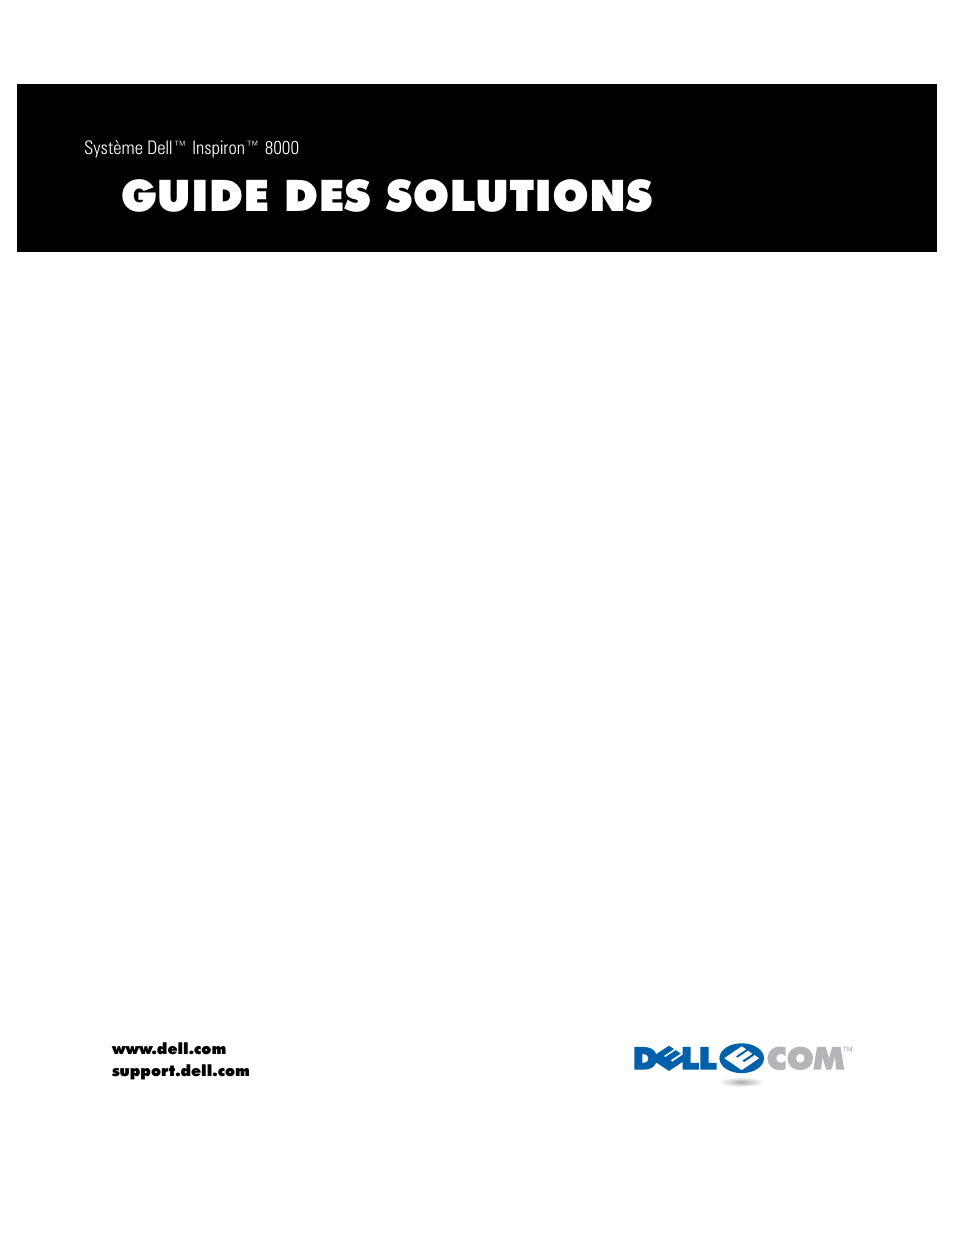 Dell Inspiron 8000 Manuel d'utilisation | Pages: 94